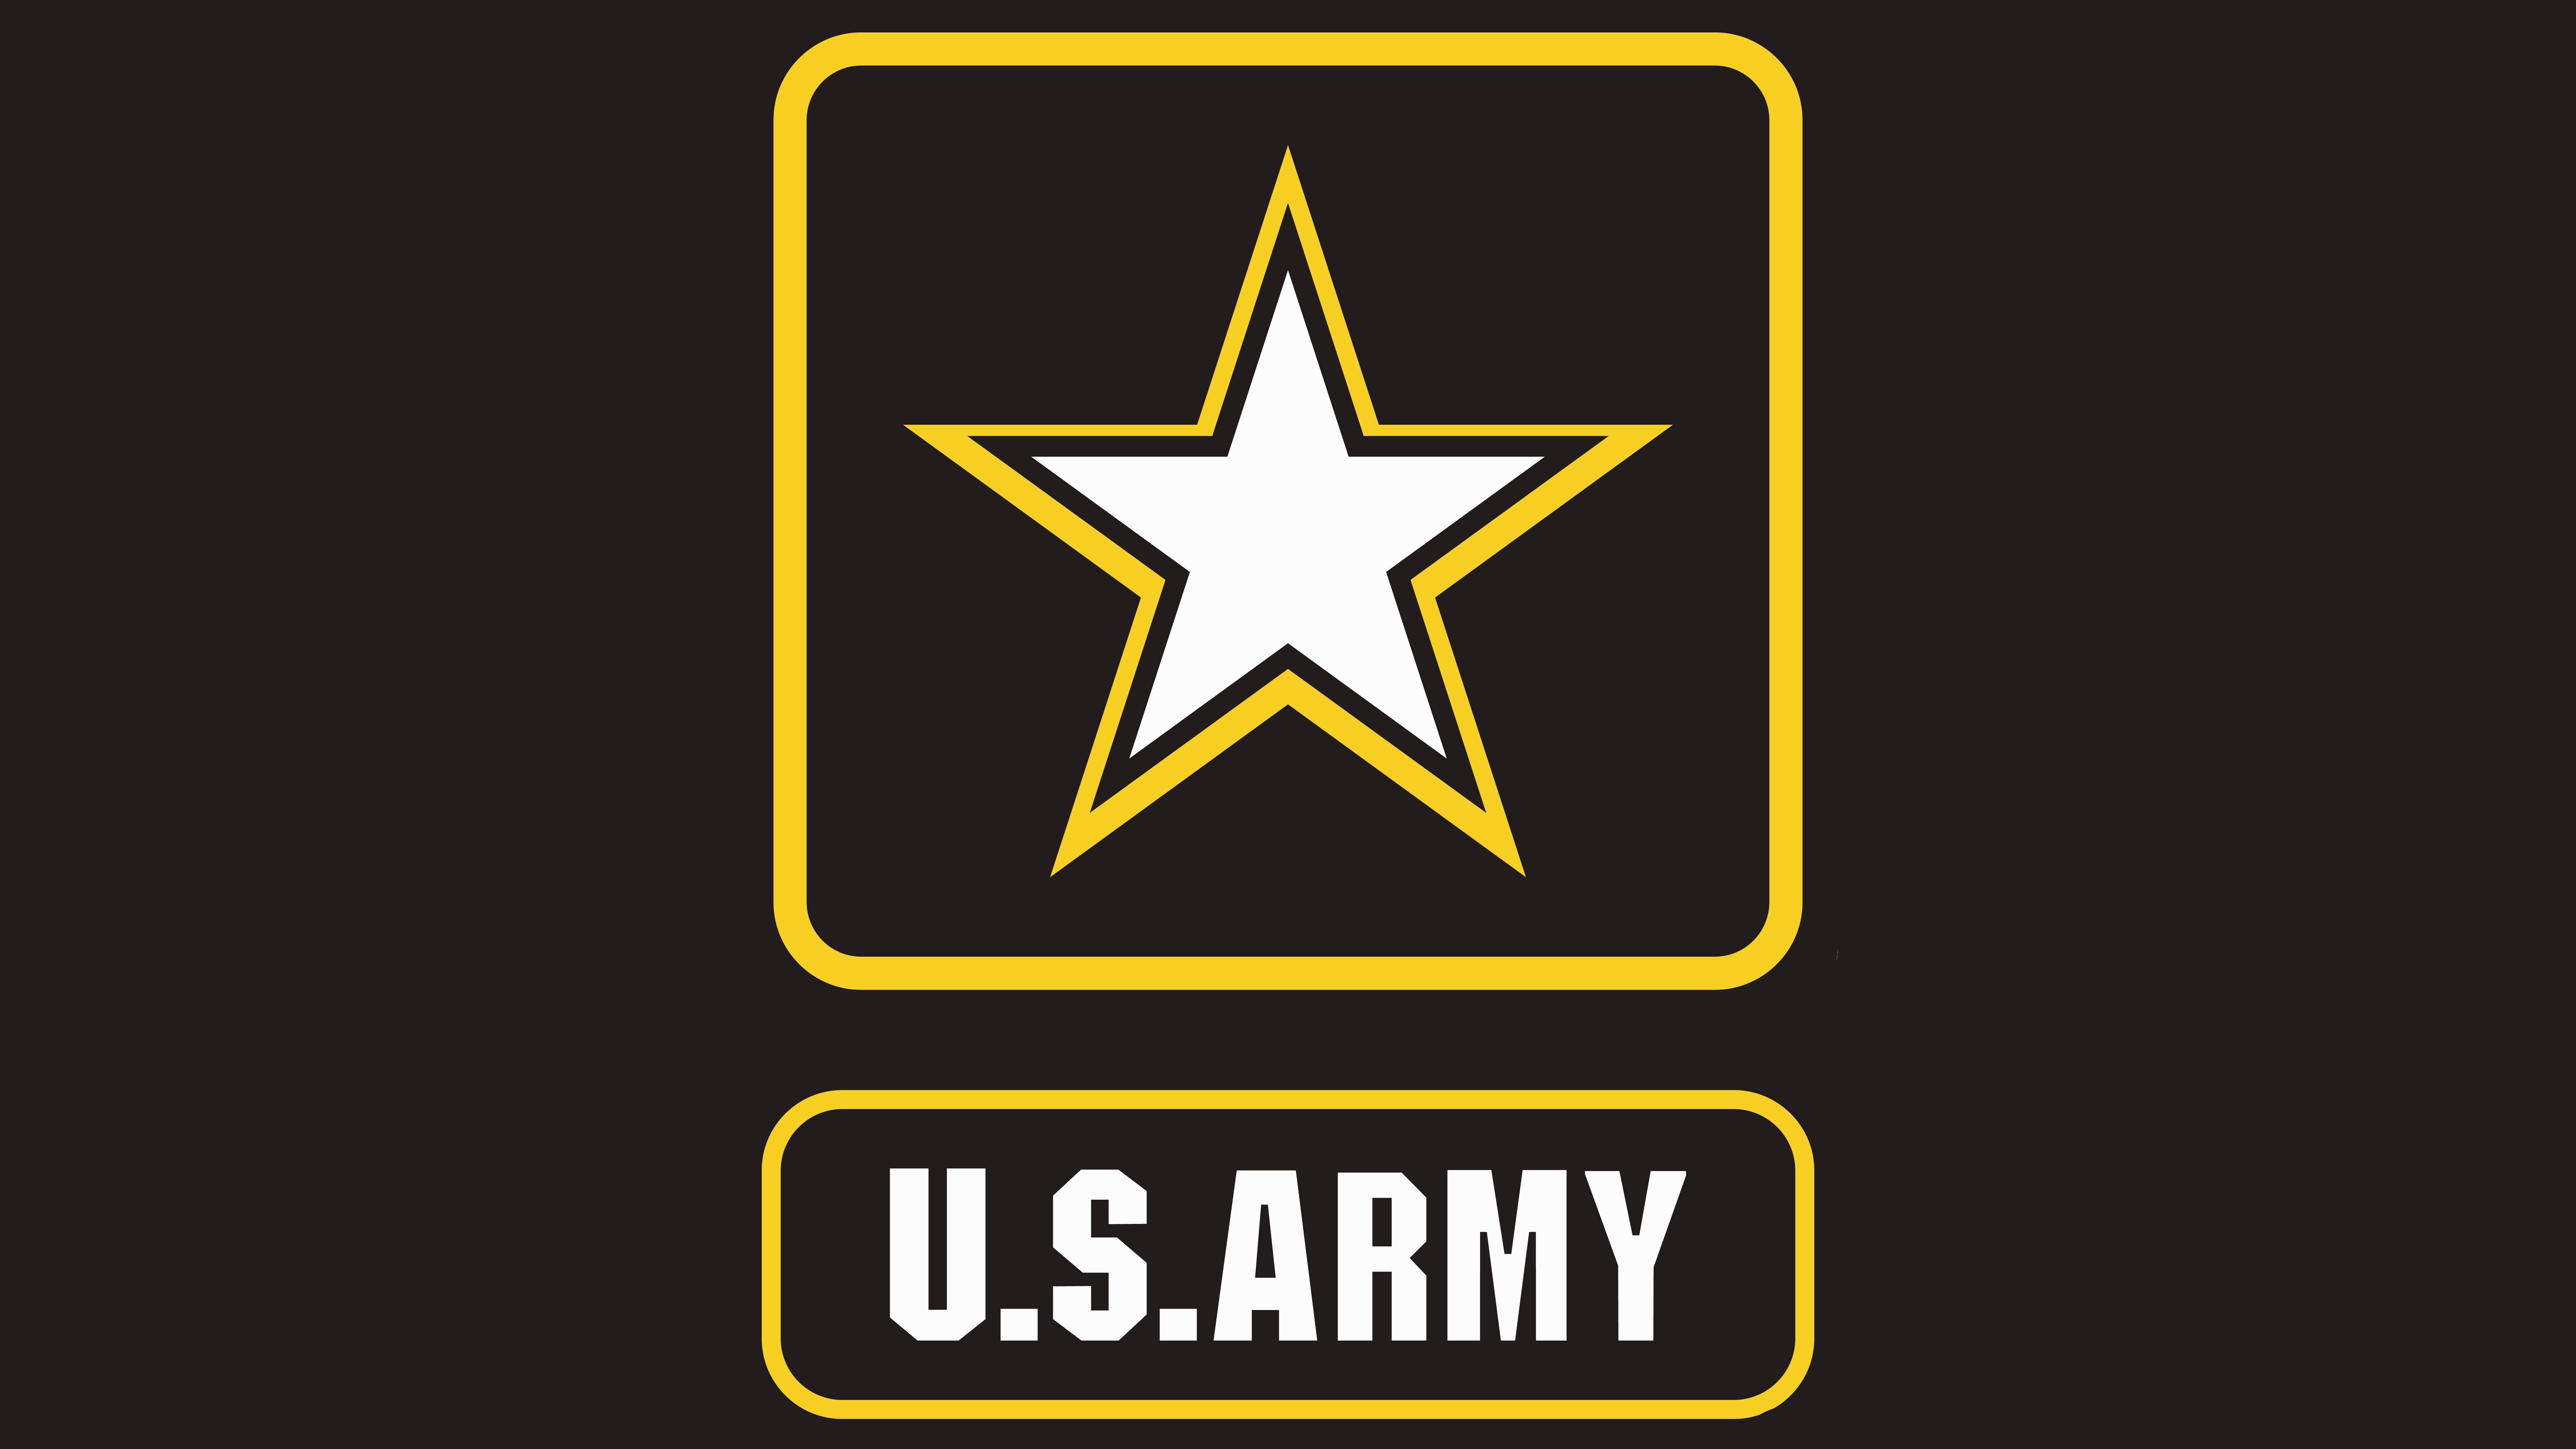 army & navy union shield civil war token